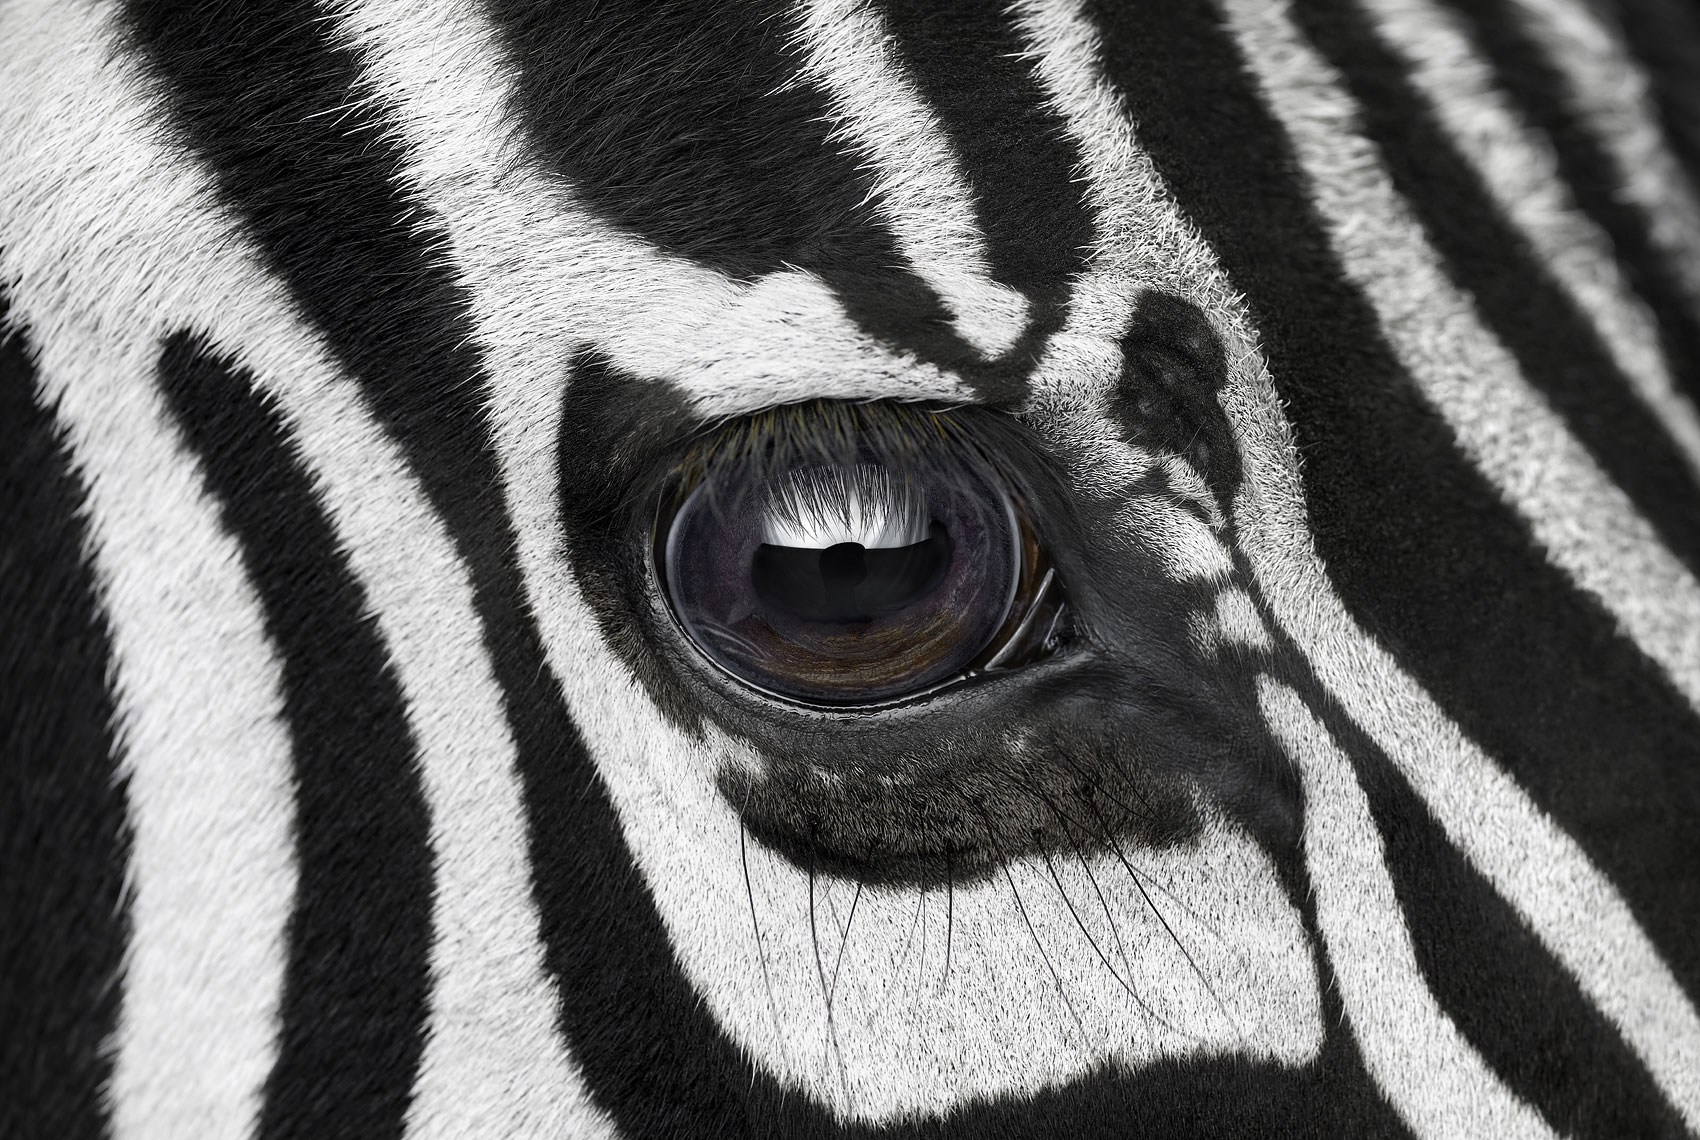 Zebra close up eye portrait by fine art wildlife photographer Brad Wilson